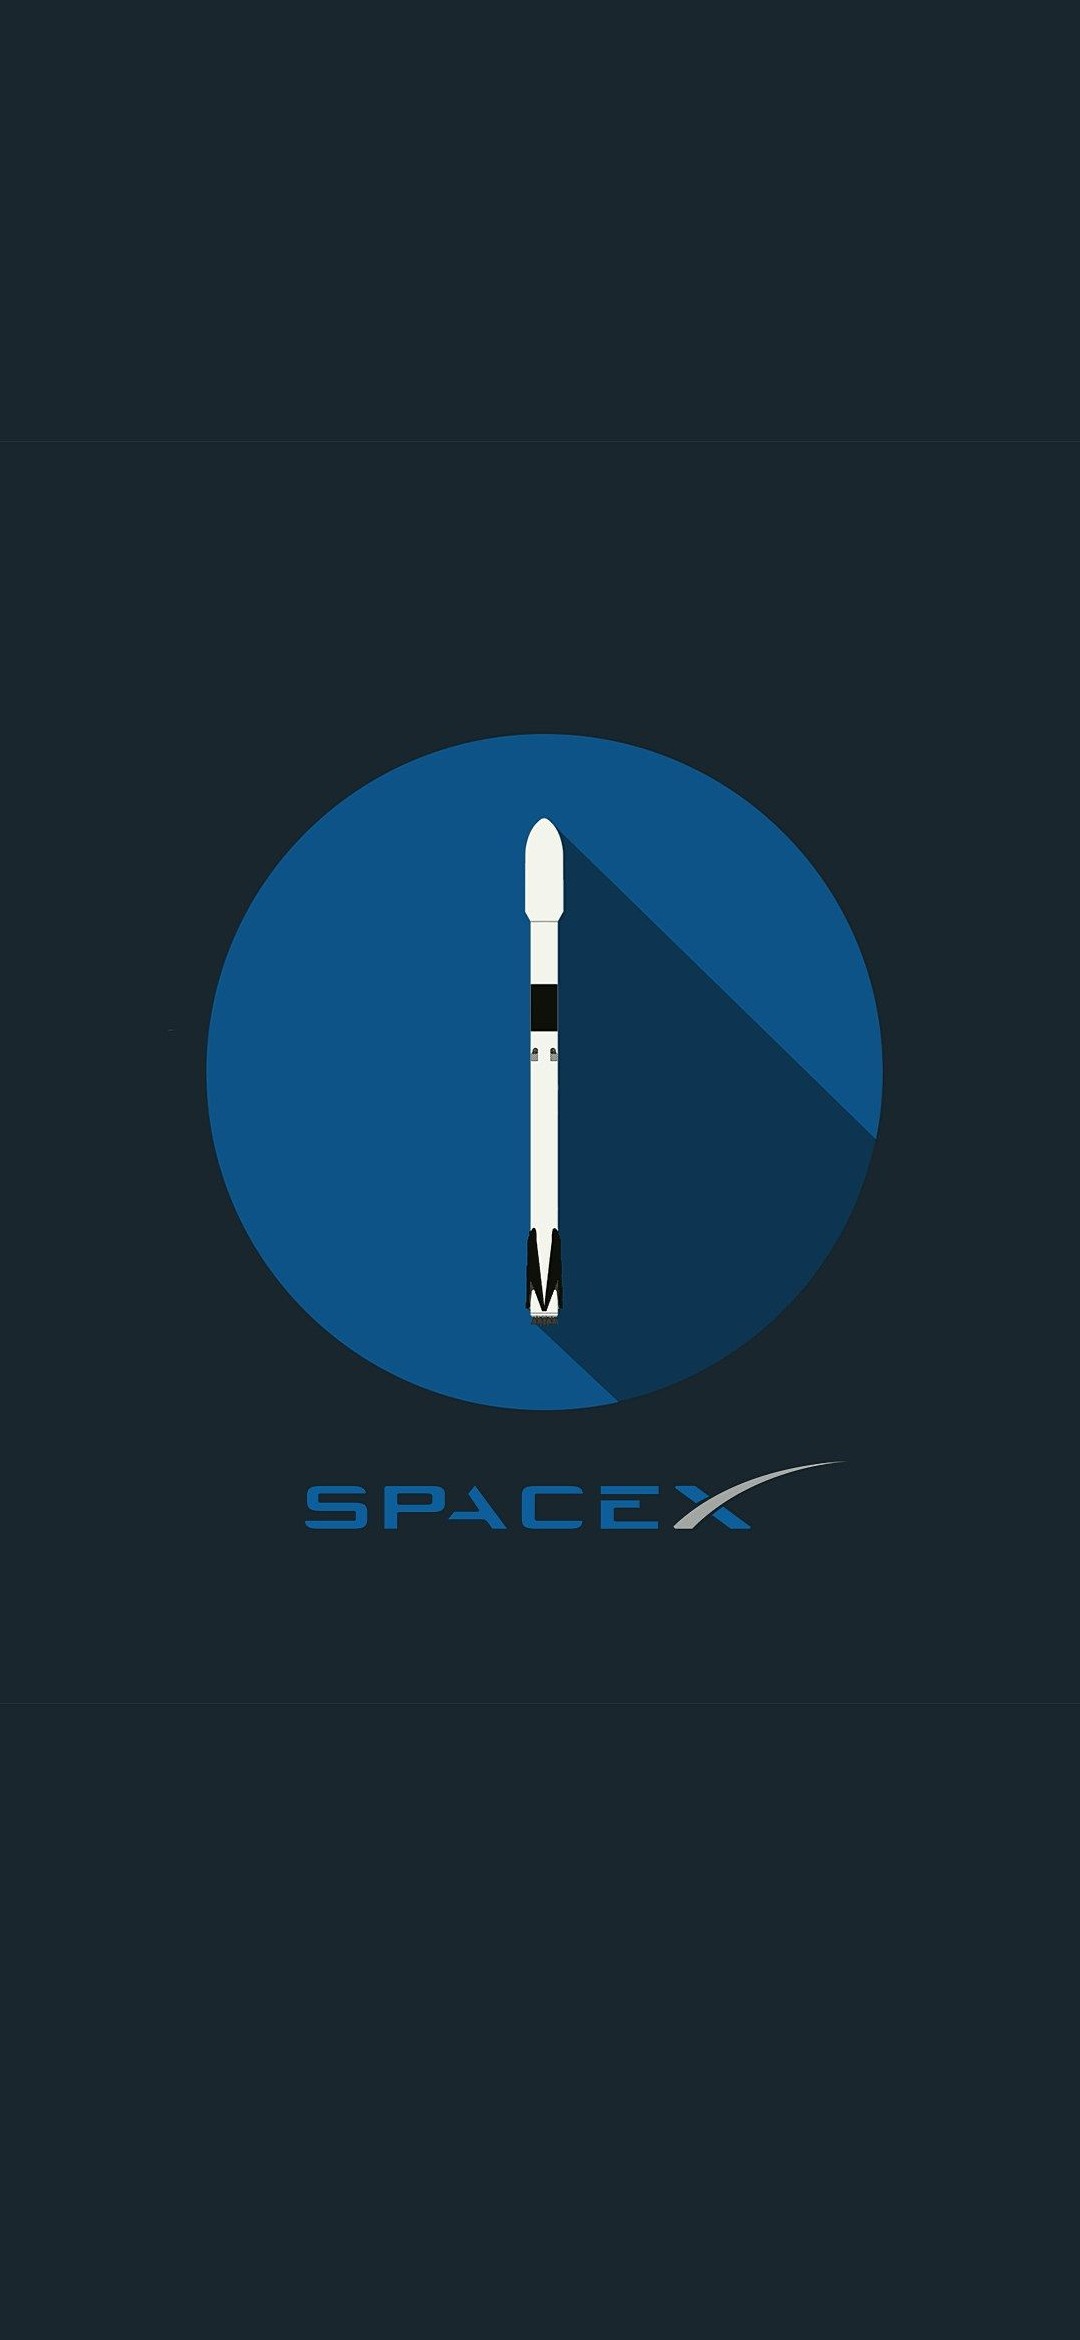 Spacex Rog Phone 3 Android スマホ壁紙 待ち受け スマラン